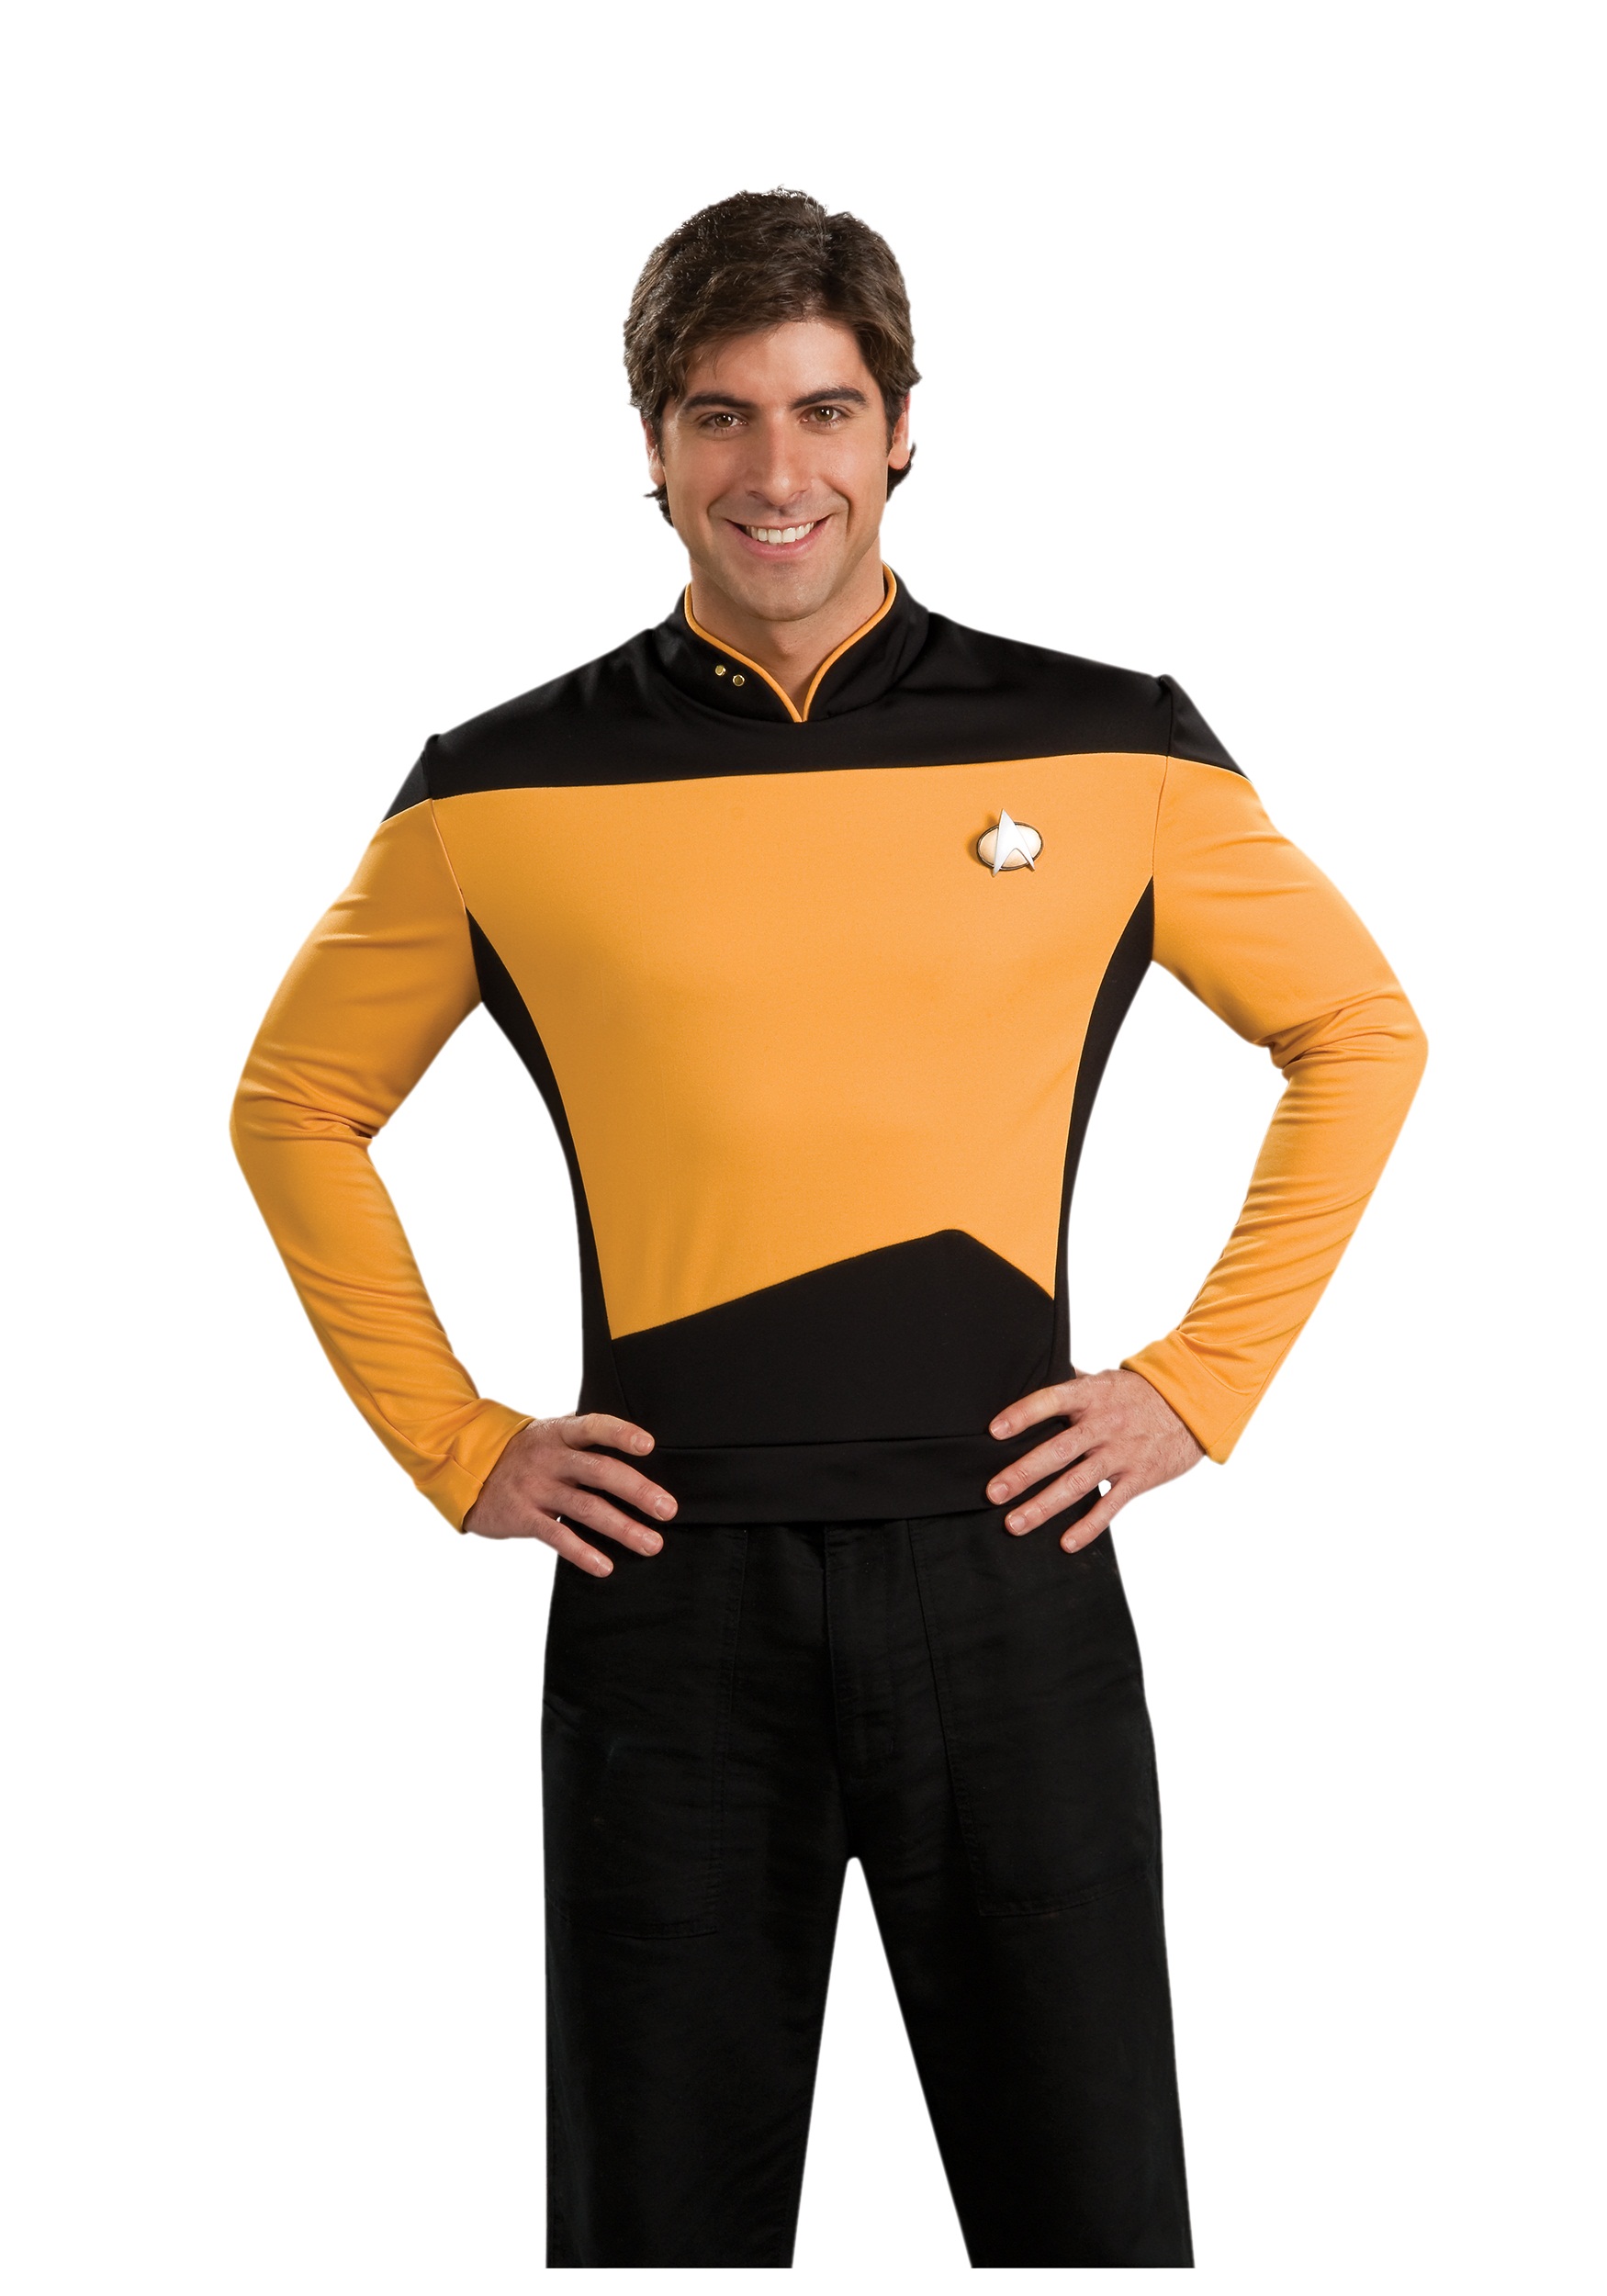 star trek uniform for sale